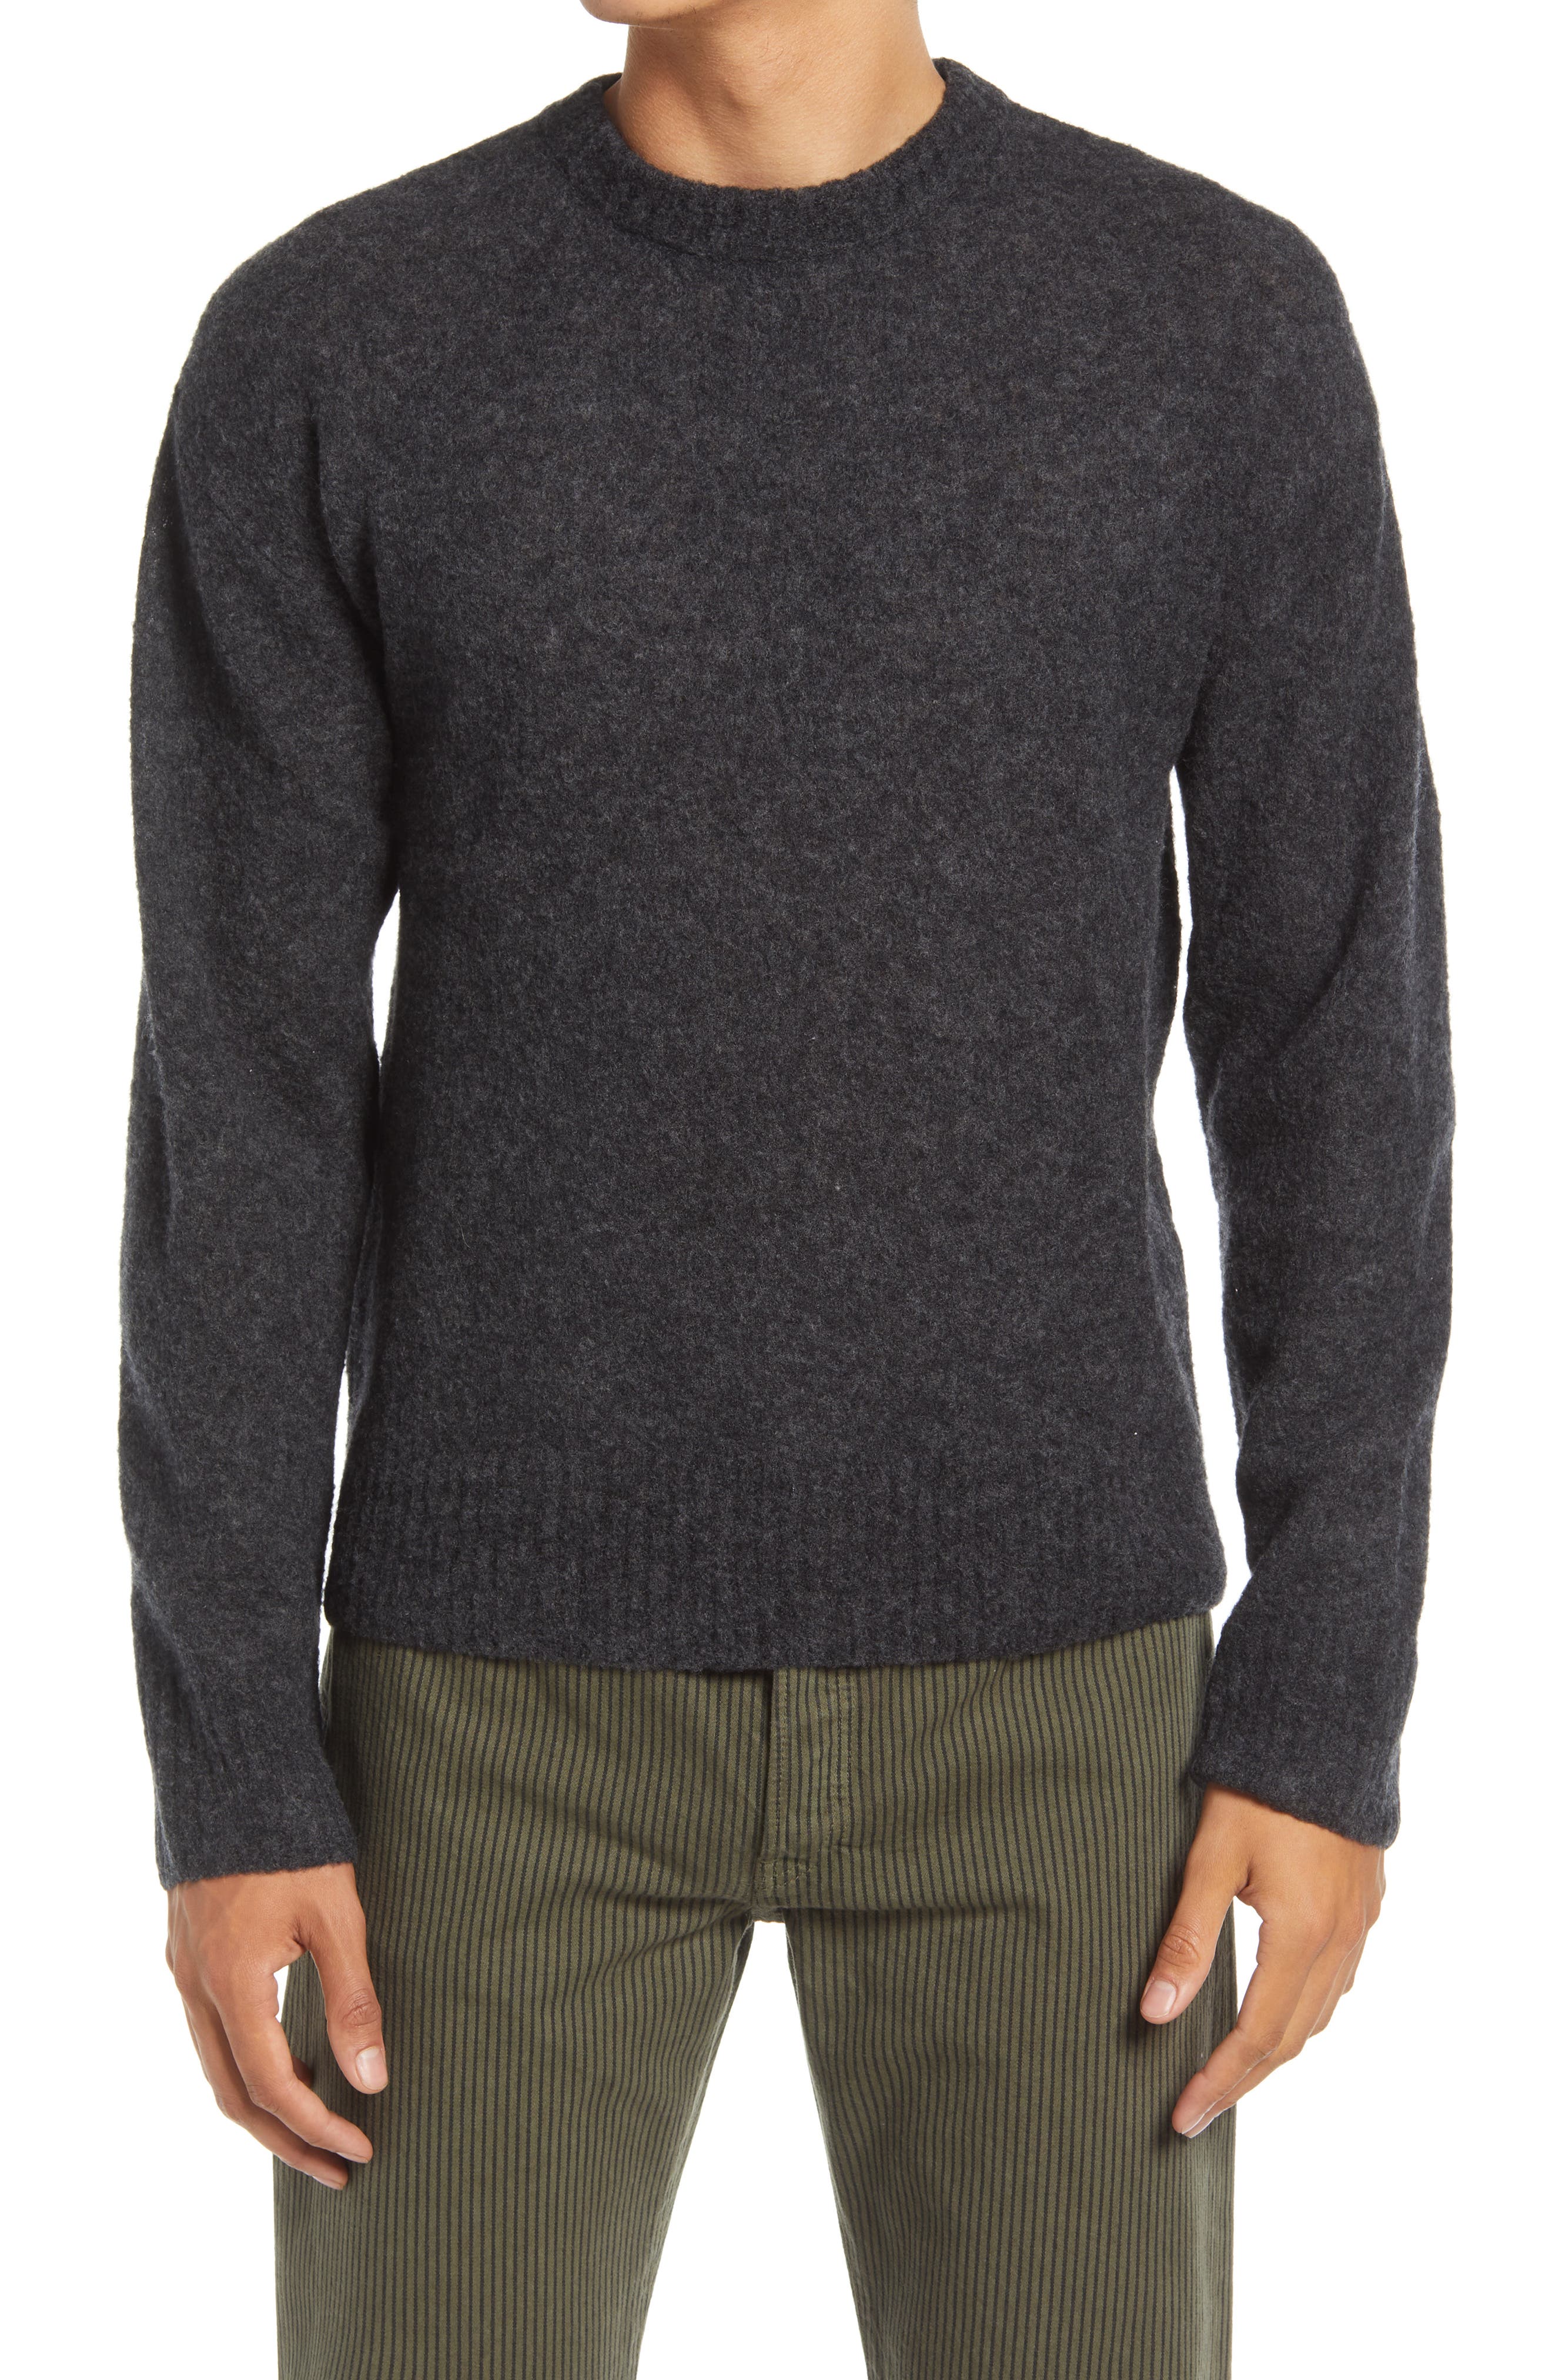 John Elliott Crewneck Powder Knit Wool Blend Sweater in Charcoal at Nordstrom, Size X-Large